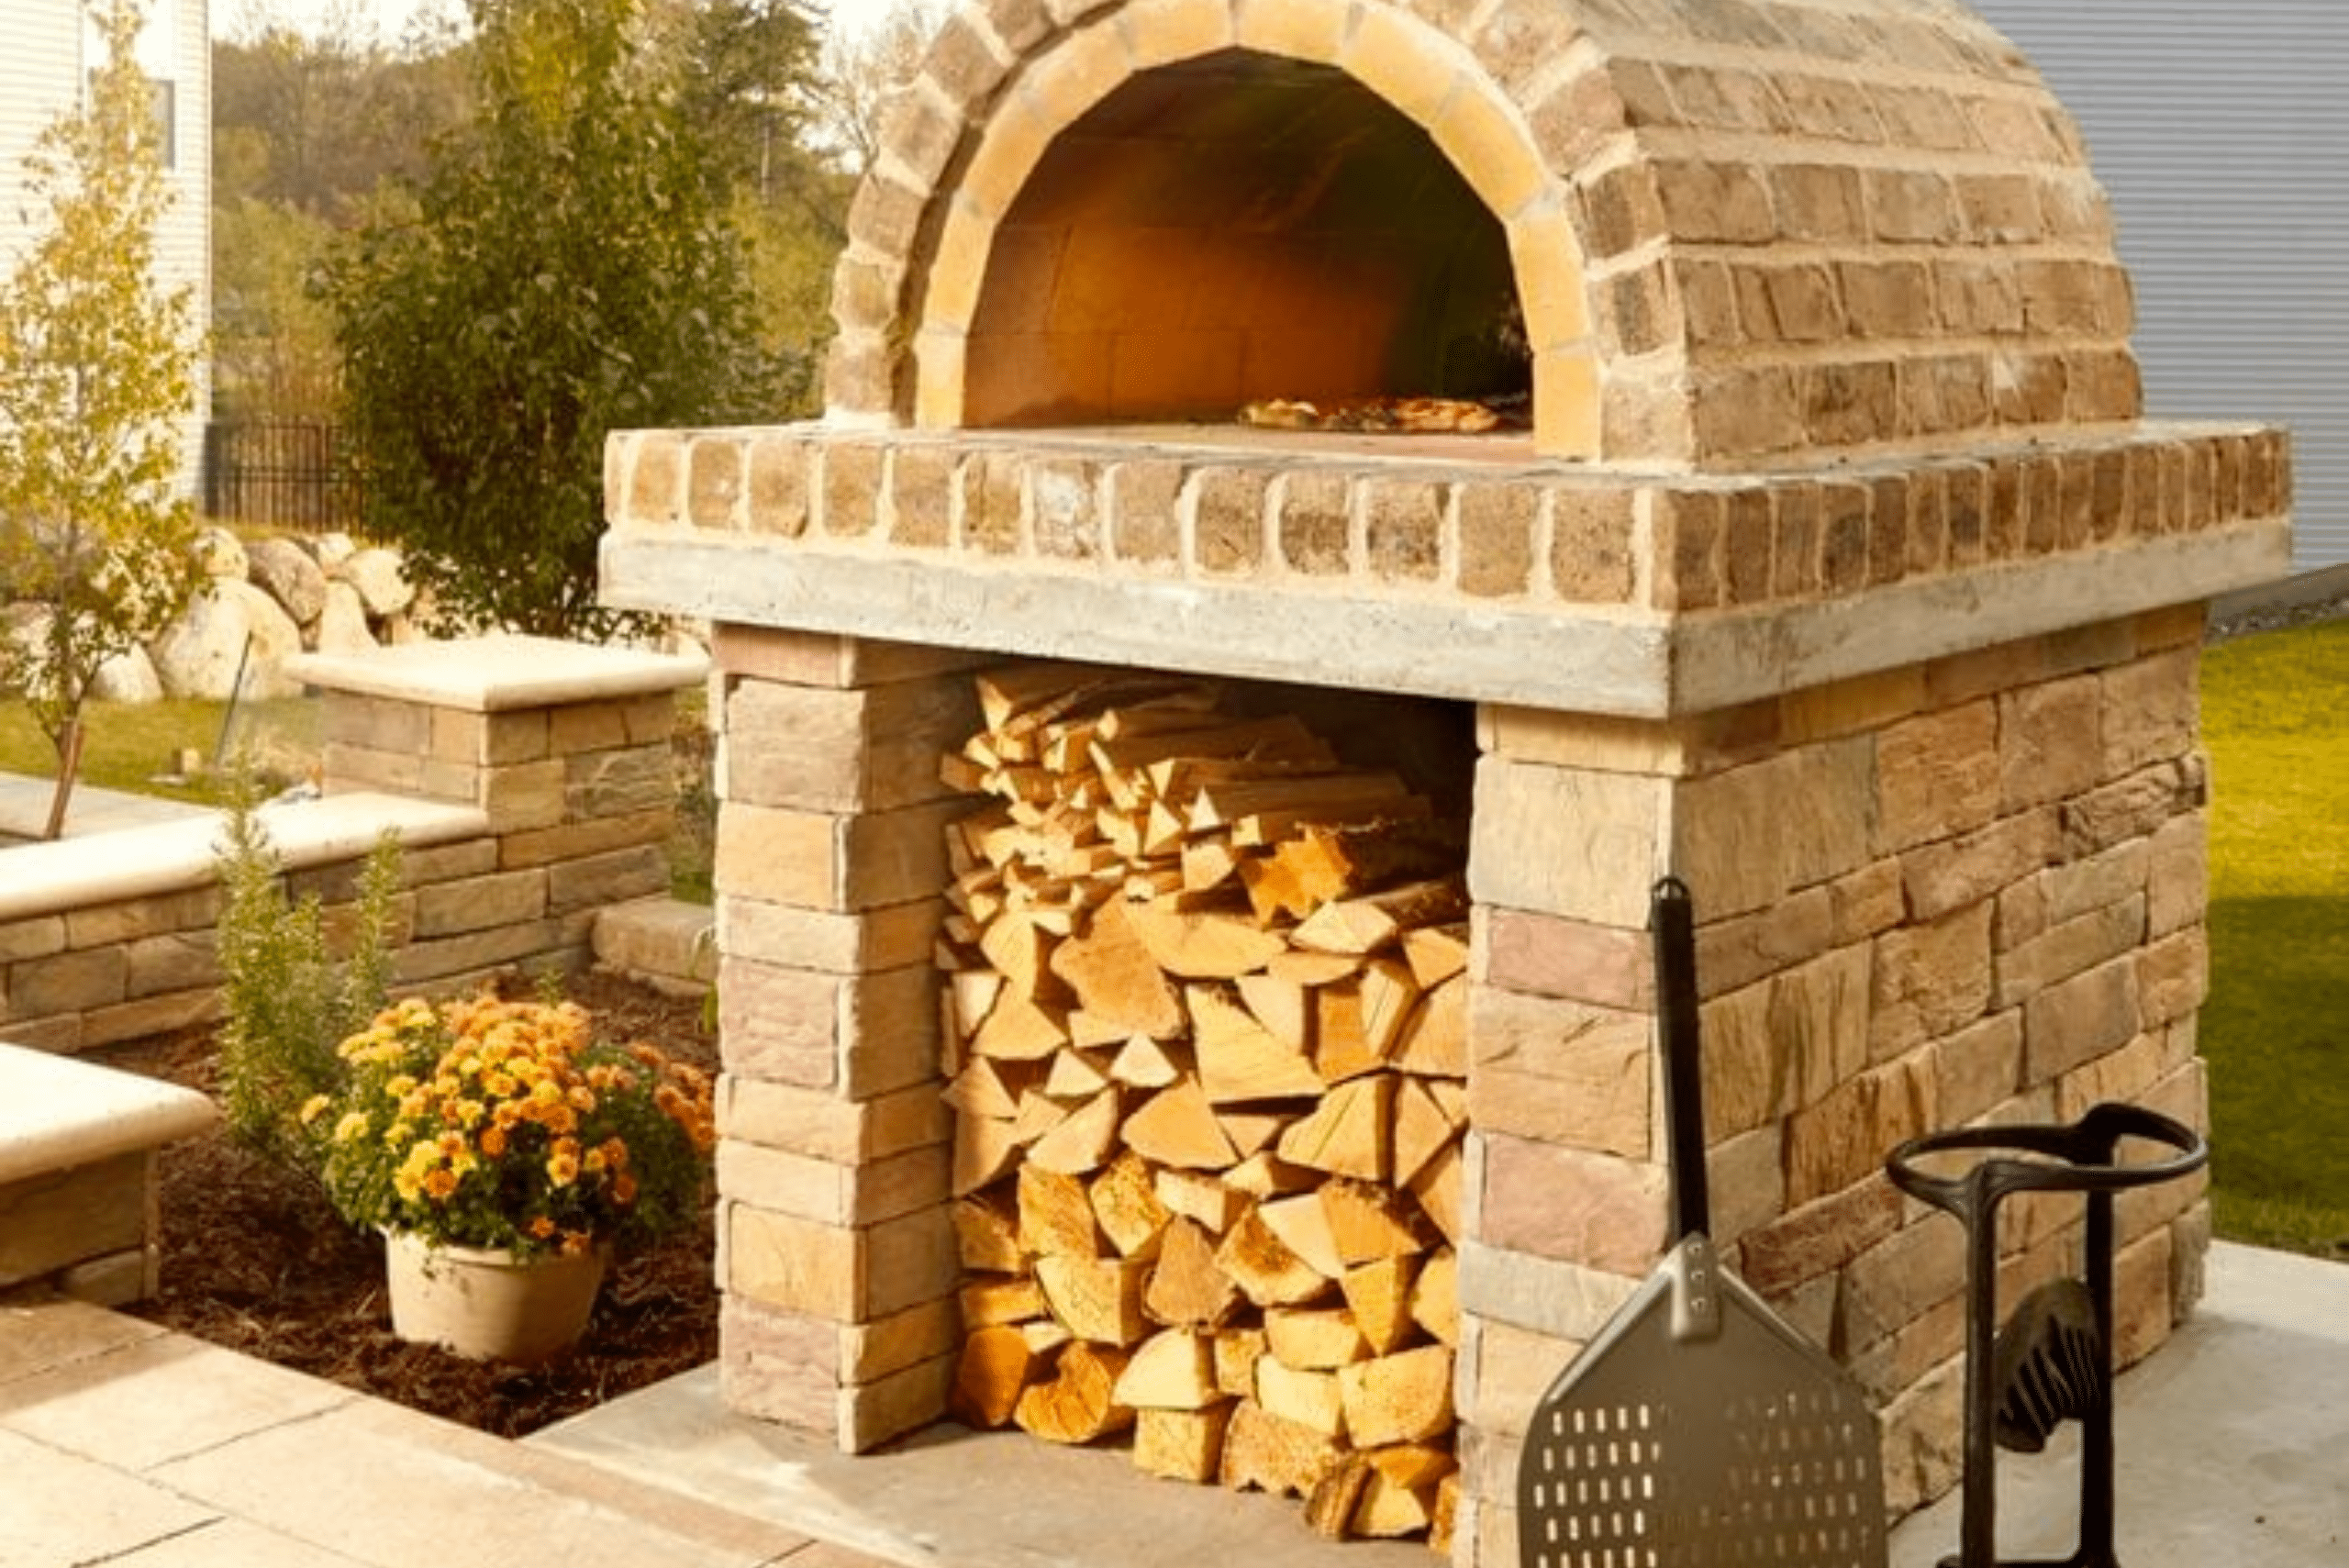 Brick oven with log storage underneath.